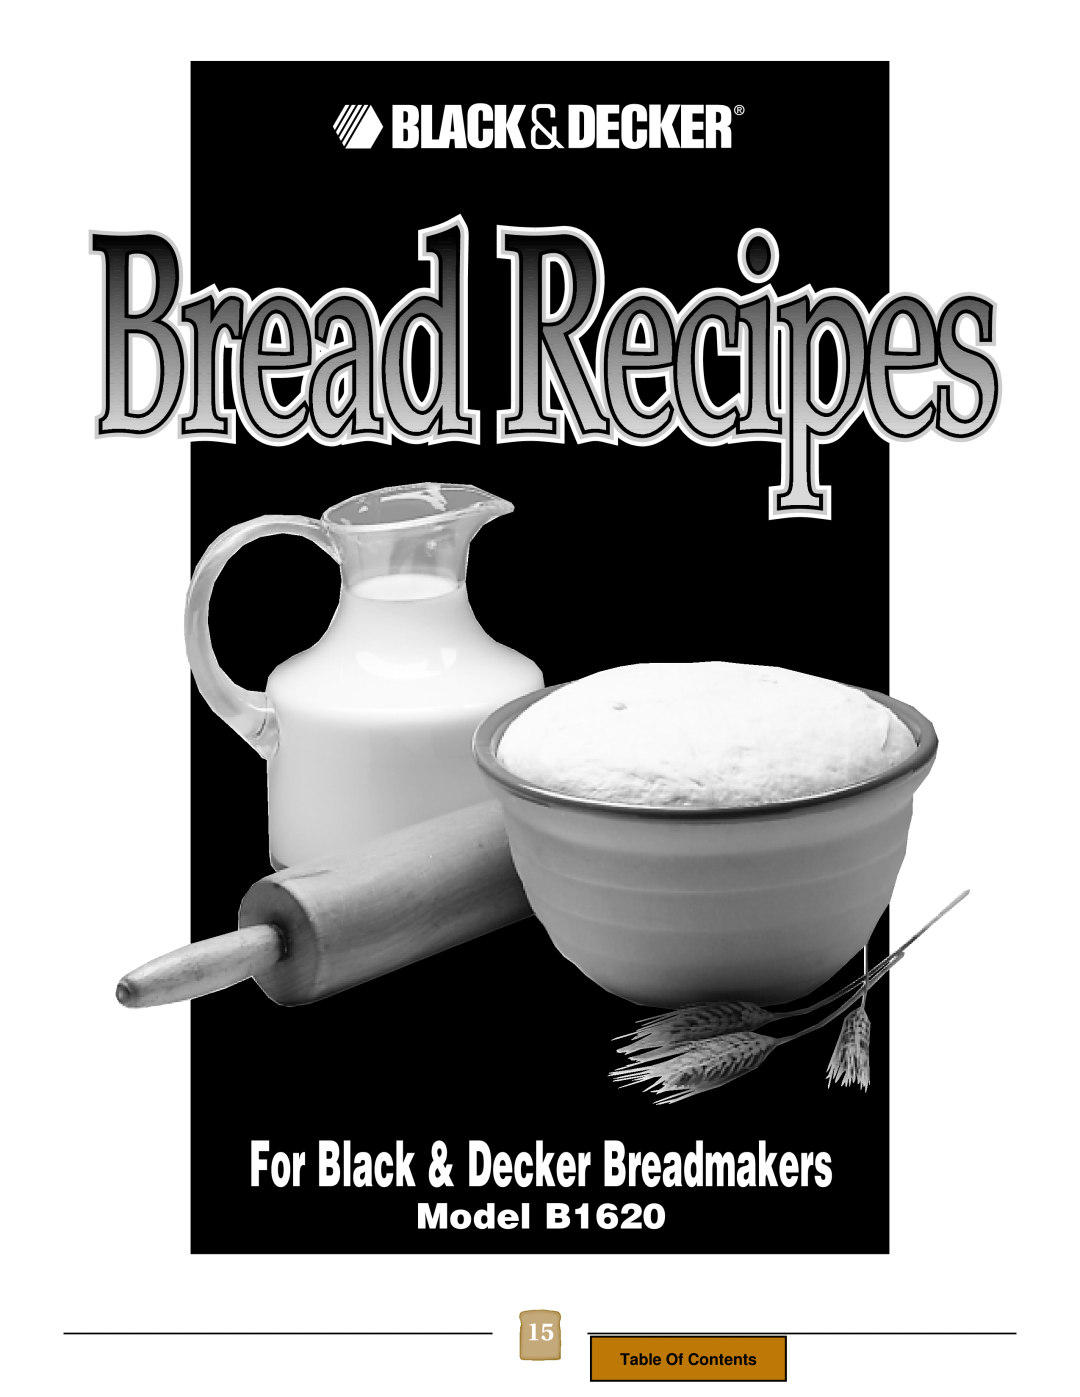 Black & Decker manual For Black & Decker Breadmakers, Model B1620, Table Of Contents 